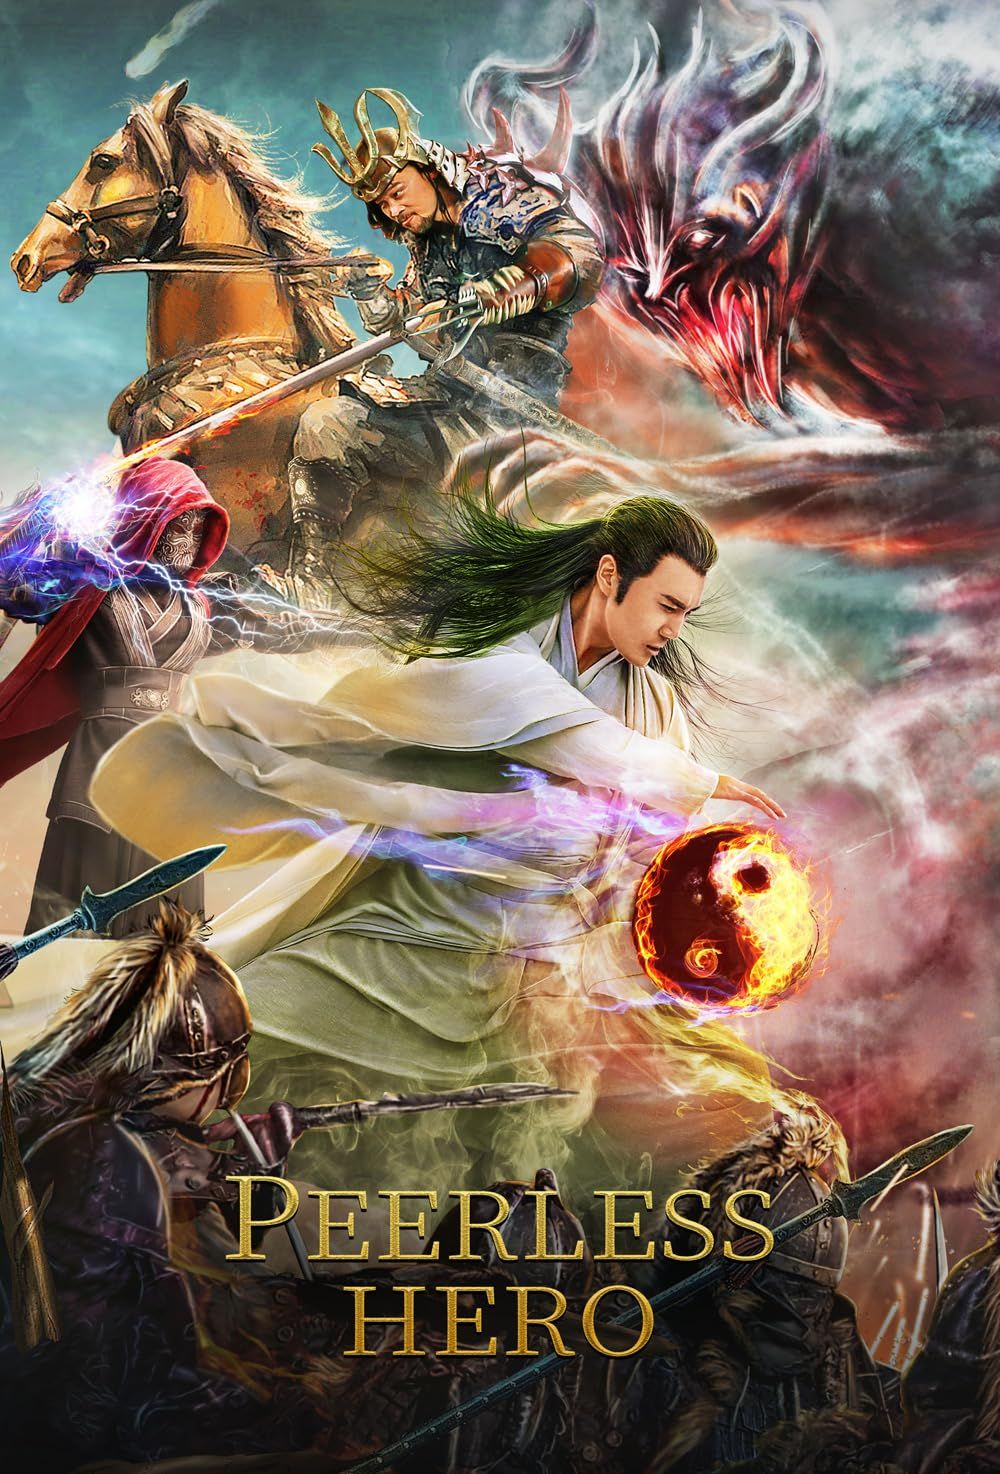 Peerless Hero (2018) Hindi Dubbed Movie download full movie